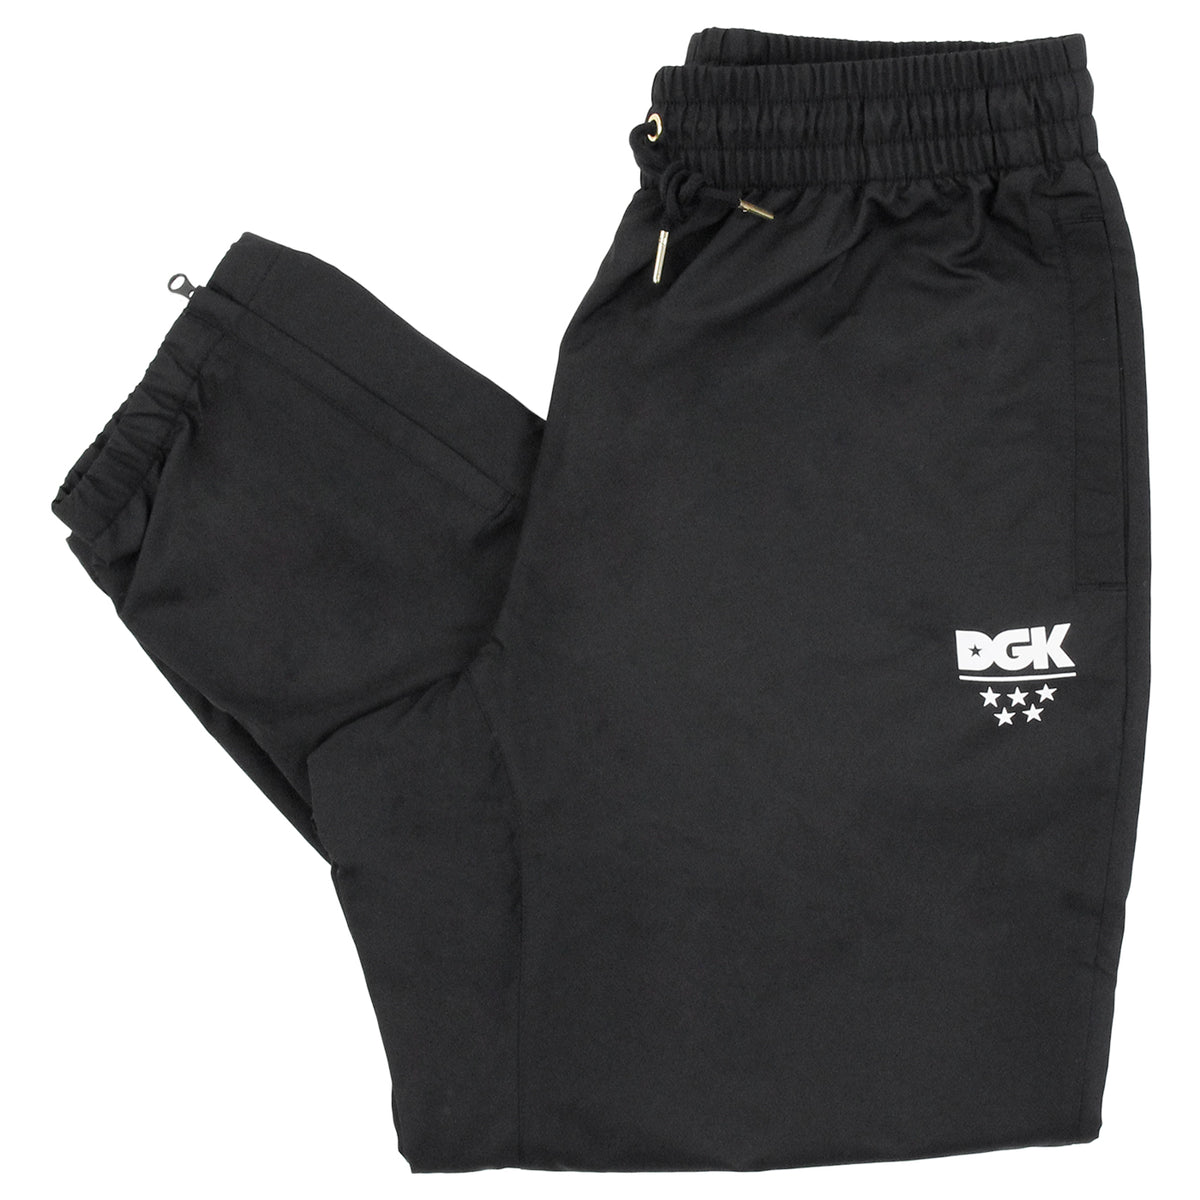 Adidas Skateboarding DGK Basketball Pants in | Bored of